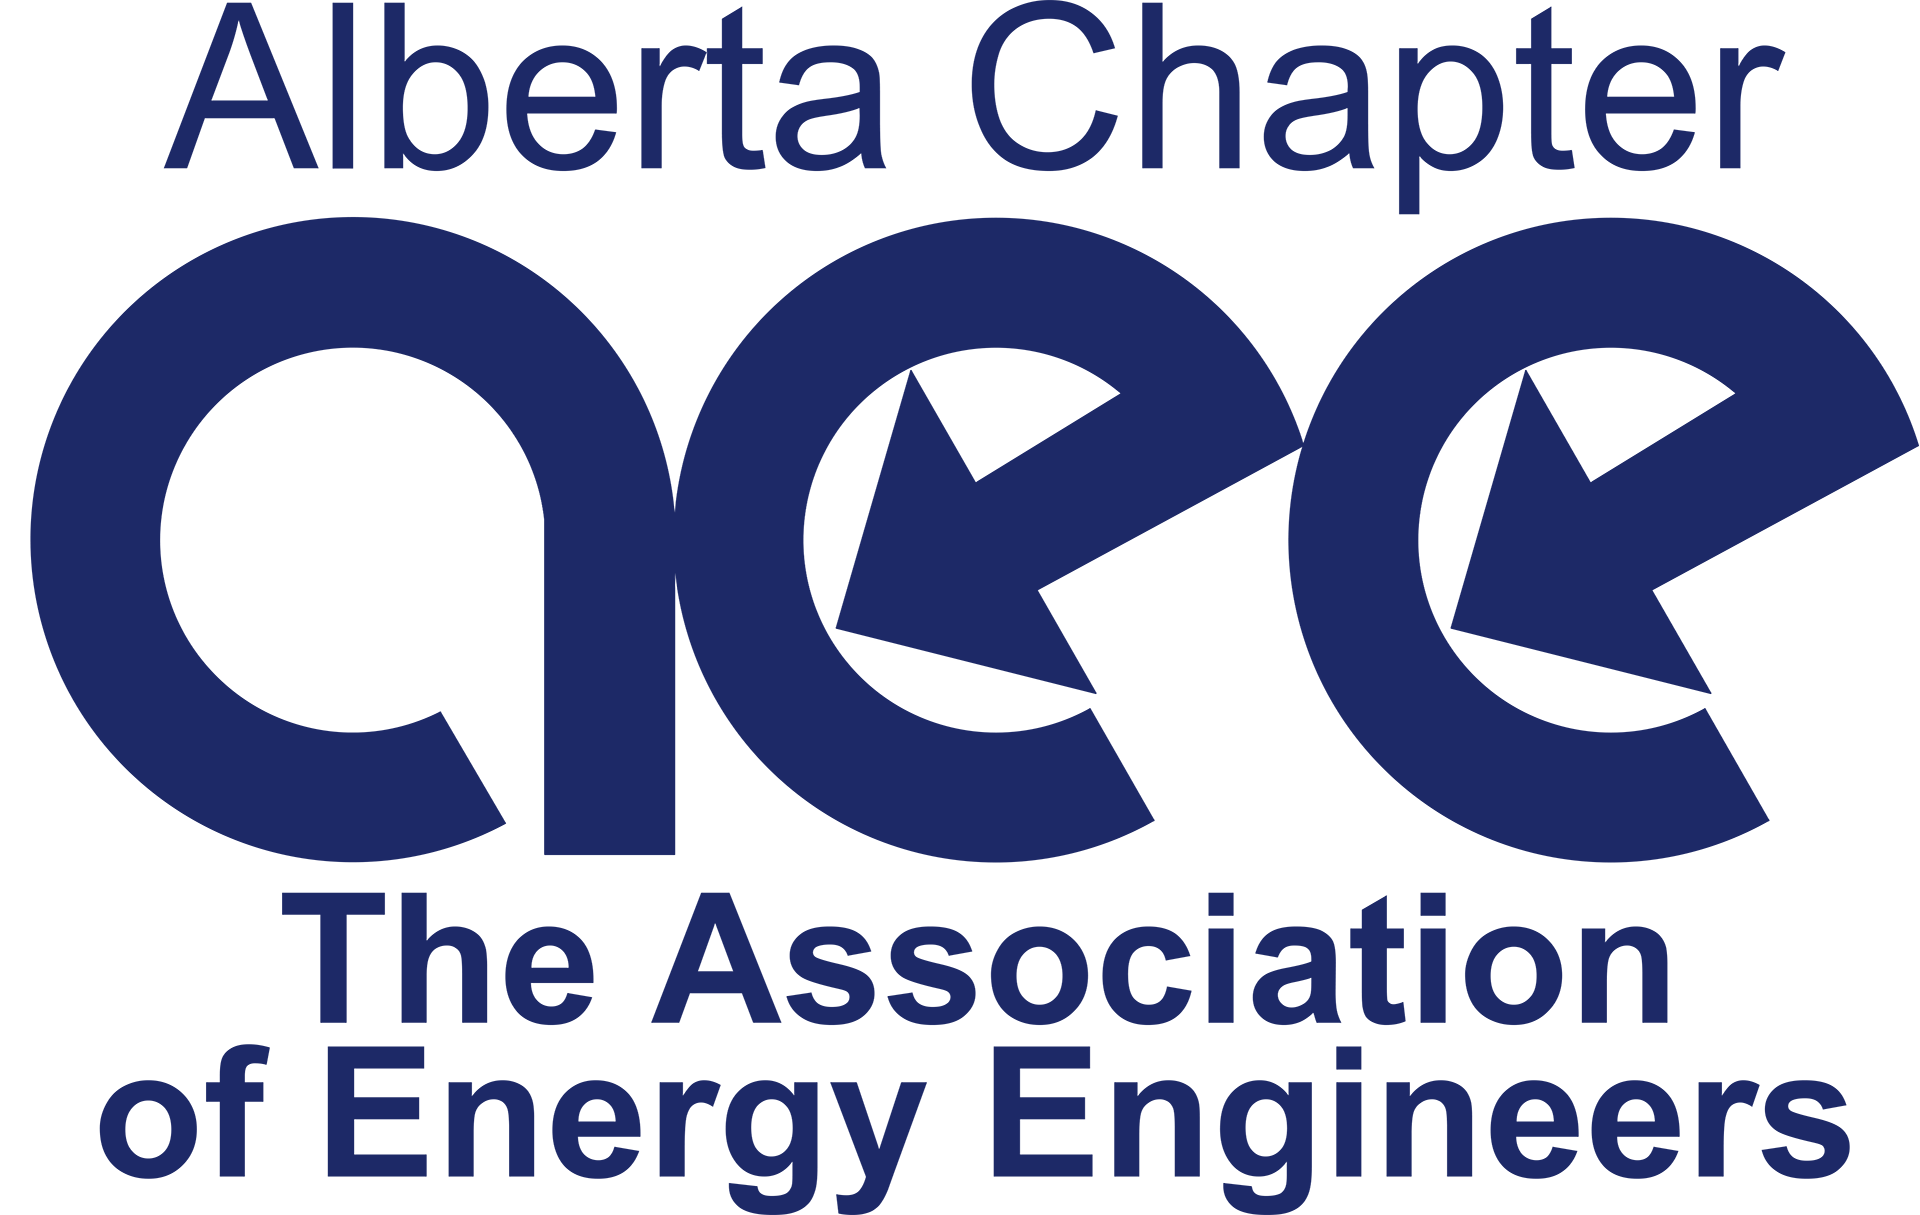 Association of Energy Engineers (AEE) Alberta Chapter